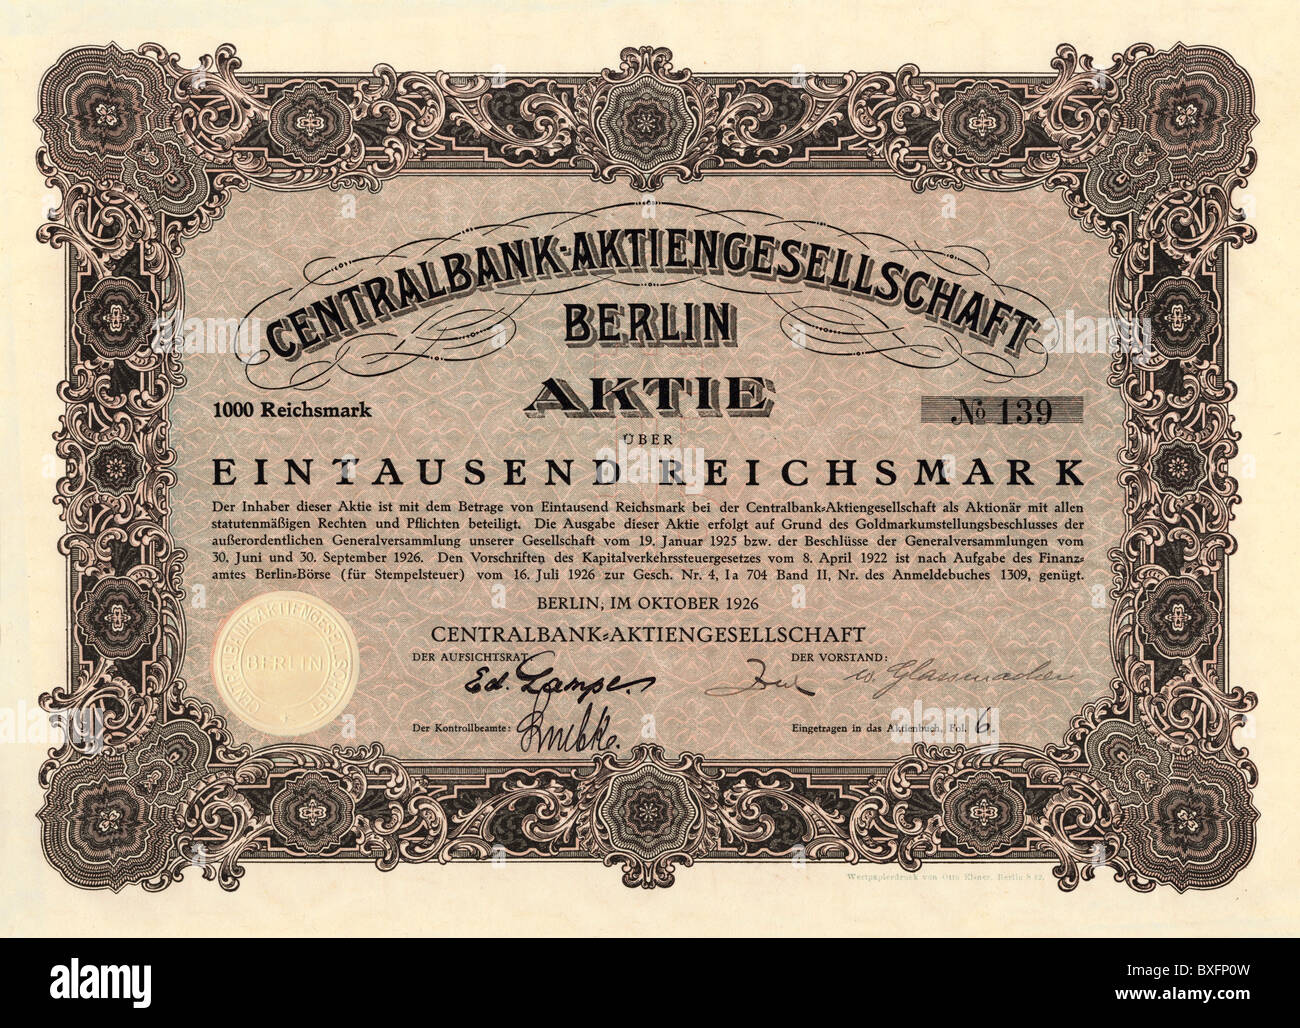 Monnaie / finance, actions, actions environ 1000 Reichsmark, Centralbank Aktiengesellschaft, Berlin, Allemagne, 1926, droits additionnels-Clearences-non disponible Banque D'Images